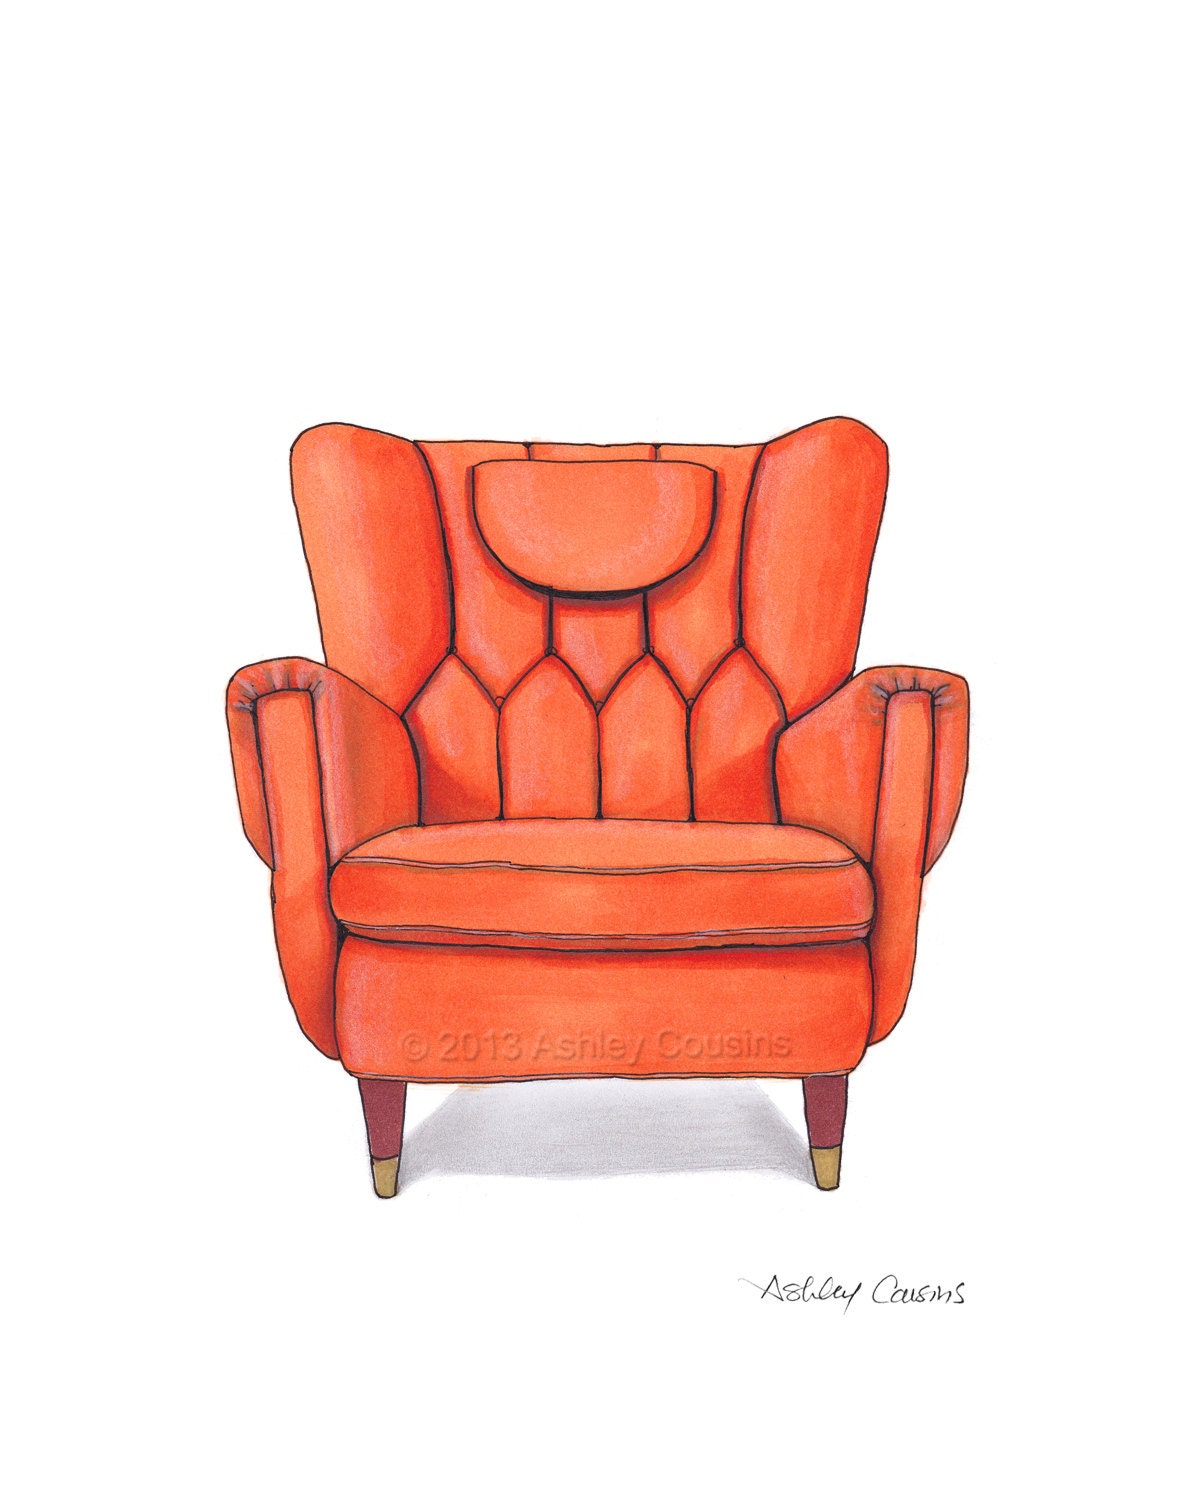 Mid Century Modern Chair Drawing, Orange Nectarine  - 8x10 - RenderingsByAshley